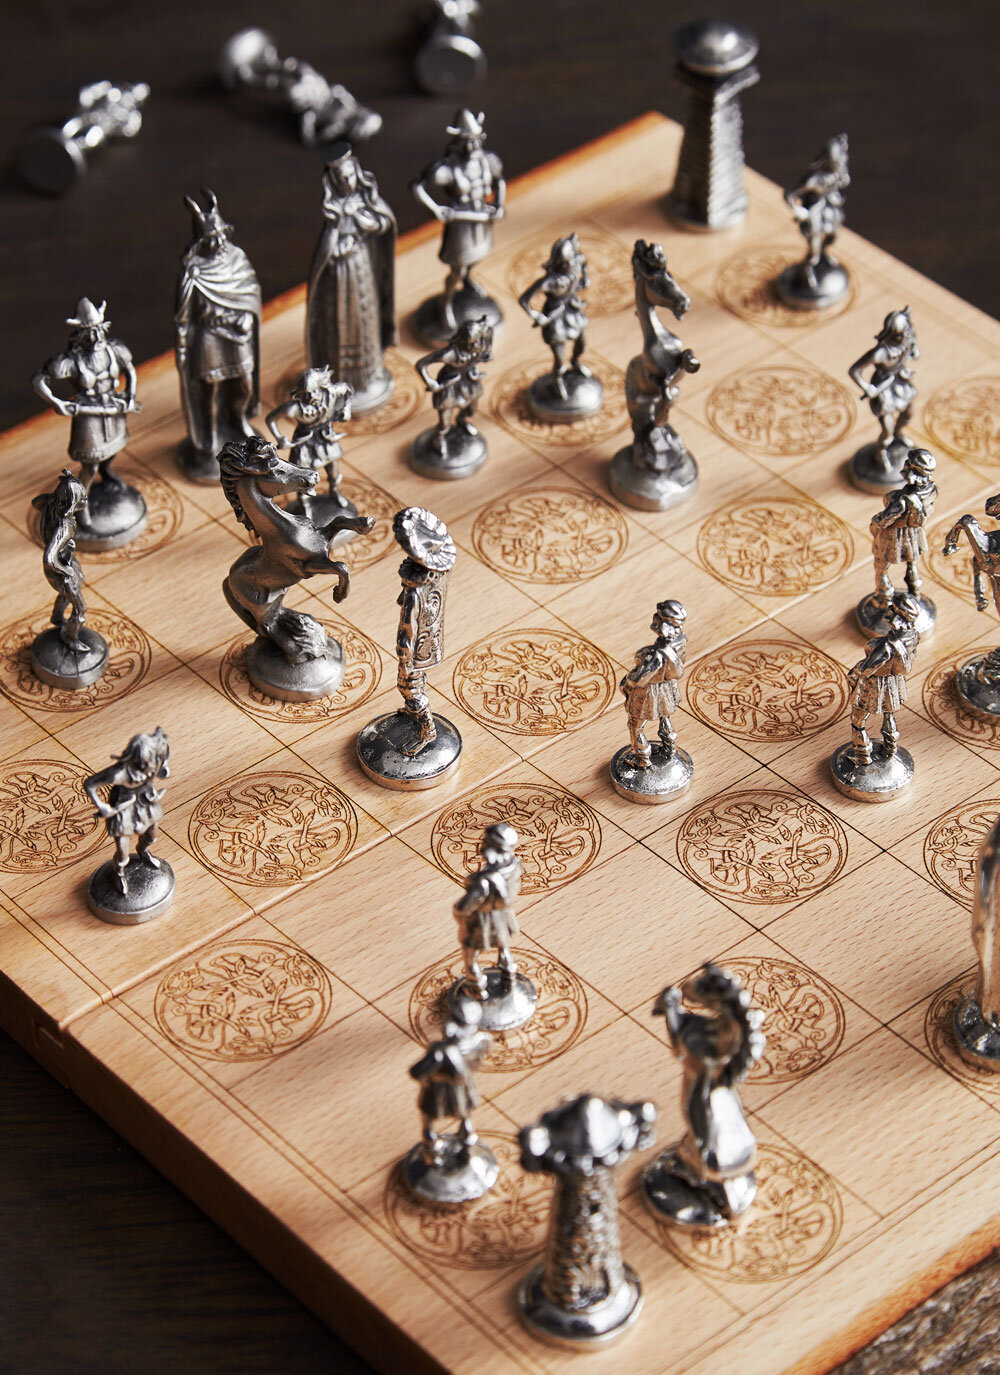 Chess Set.